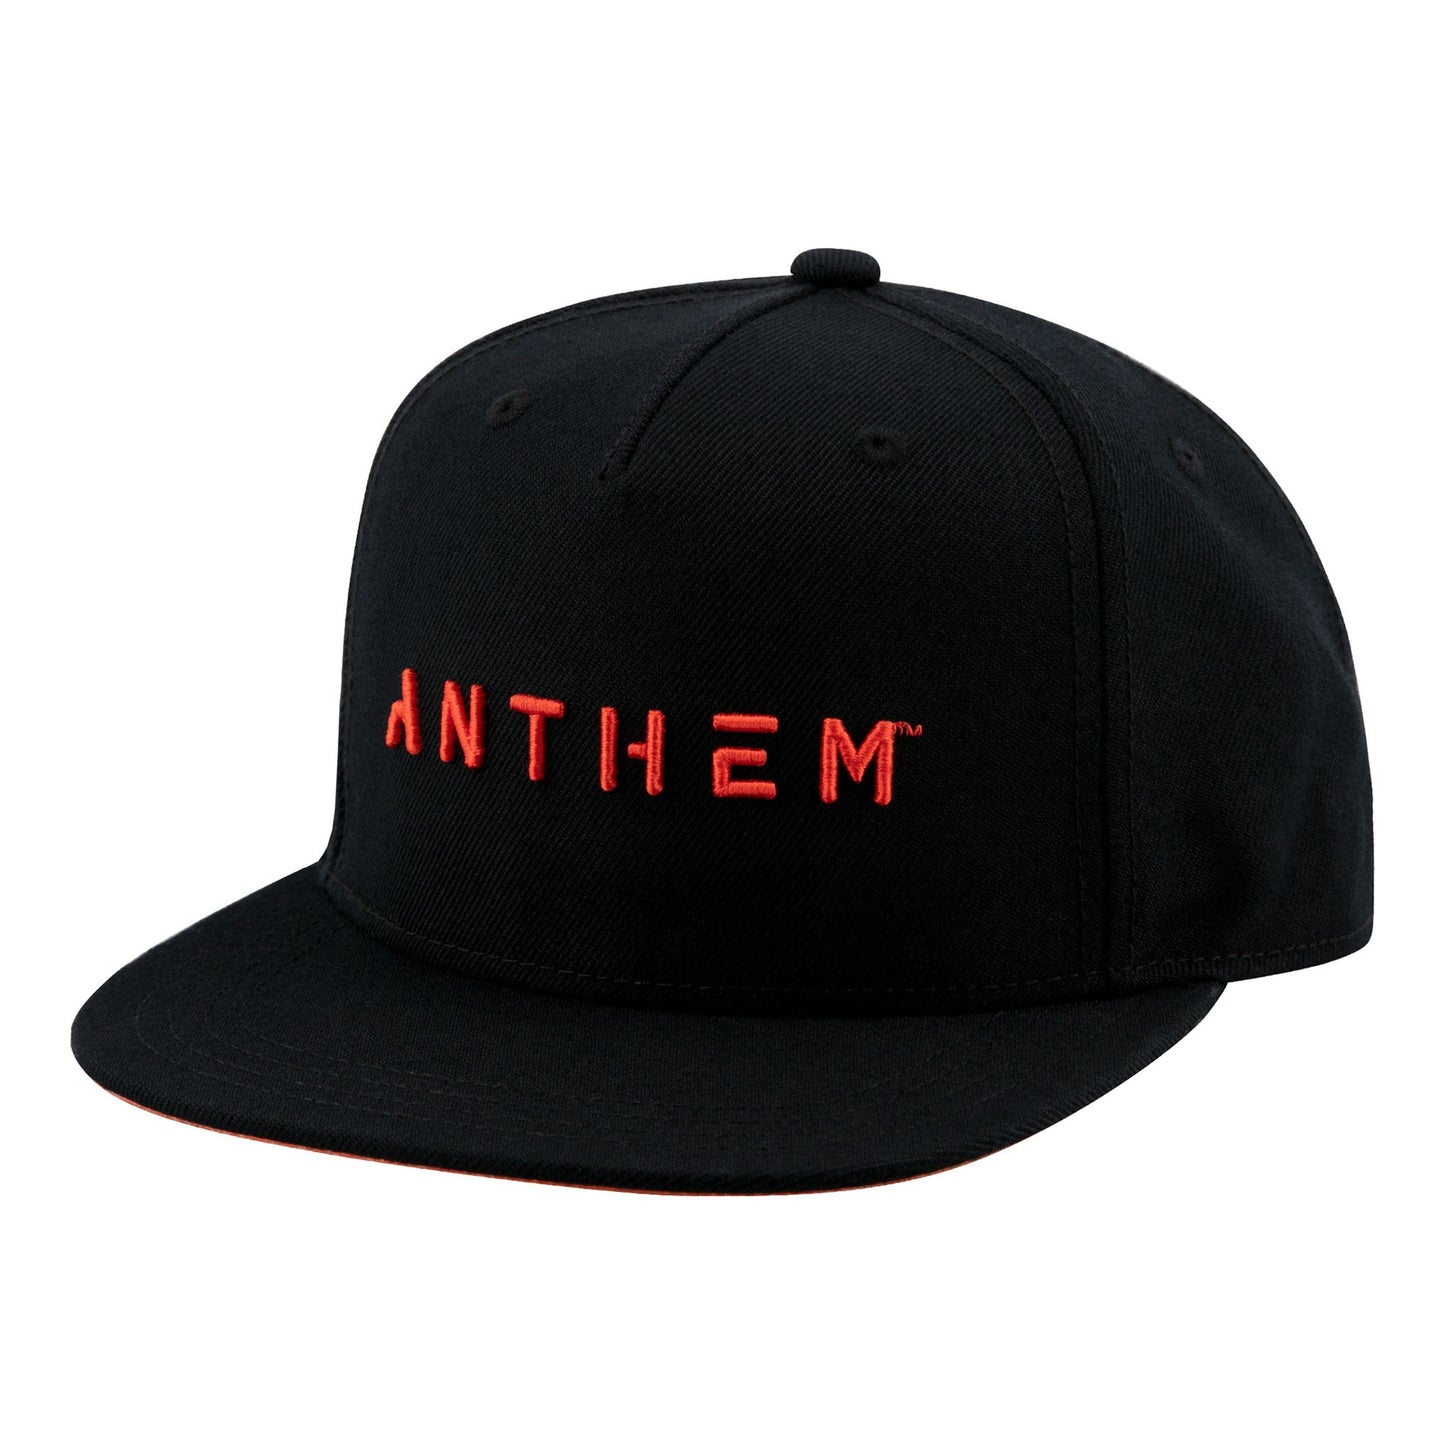 Anthem Javelin Snap Back Hat